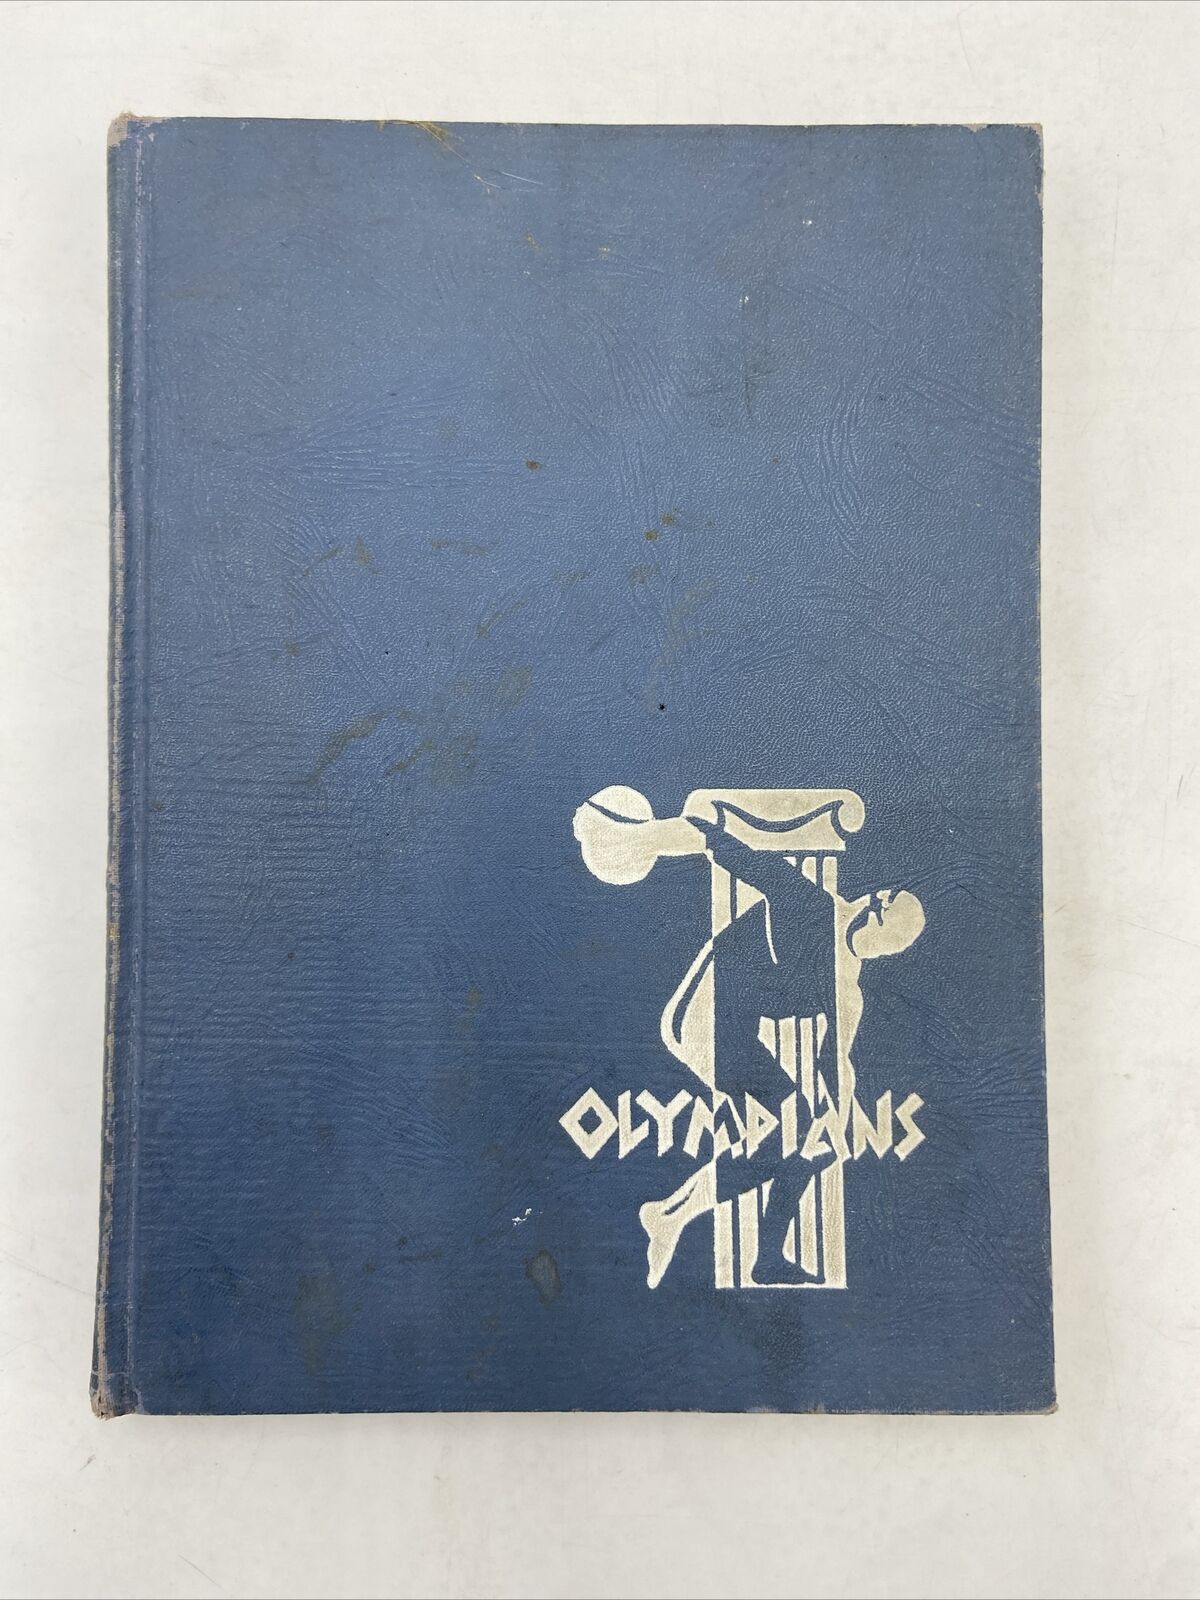 1941 Summer High School Yearbook. Olympian. Manual Arts. Los Angeles, Cal.